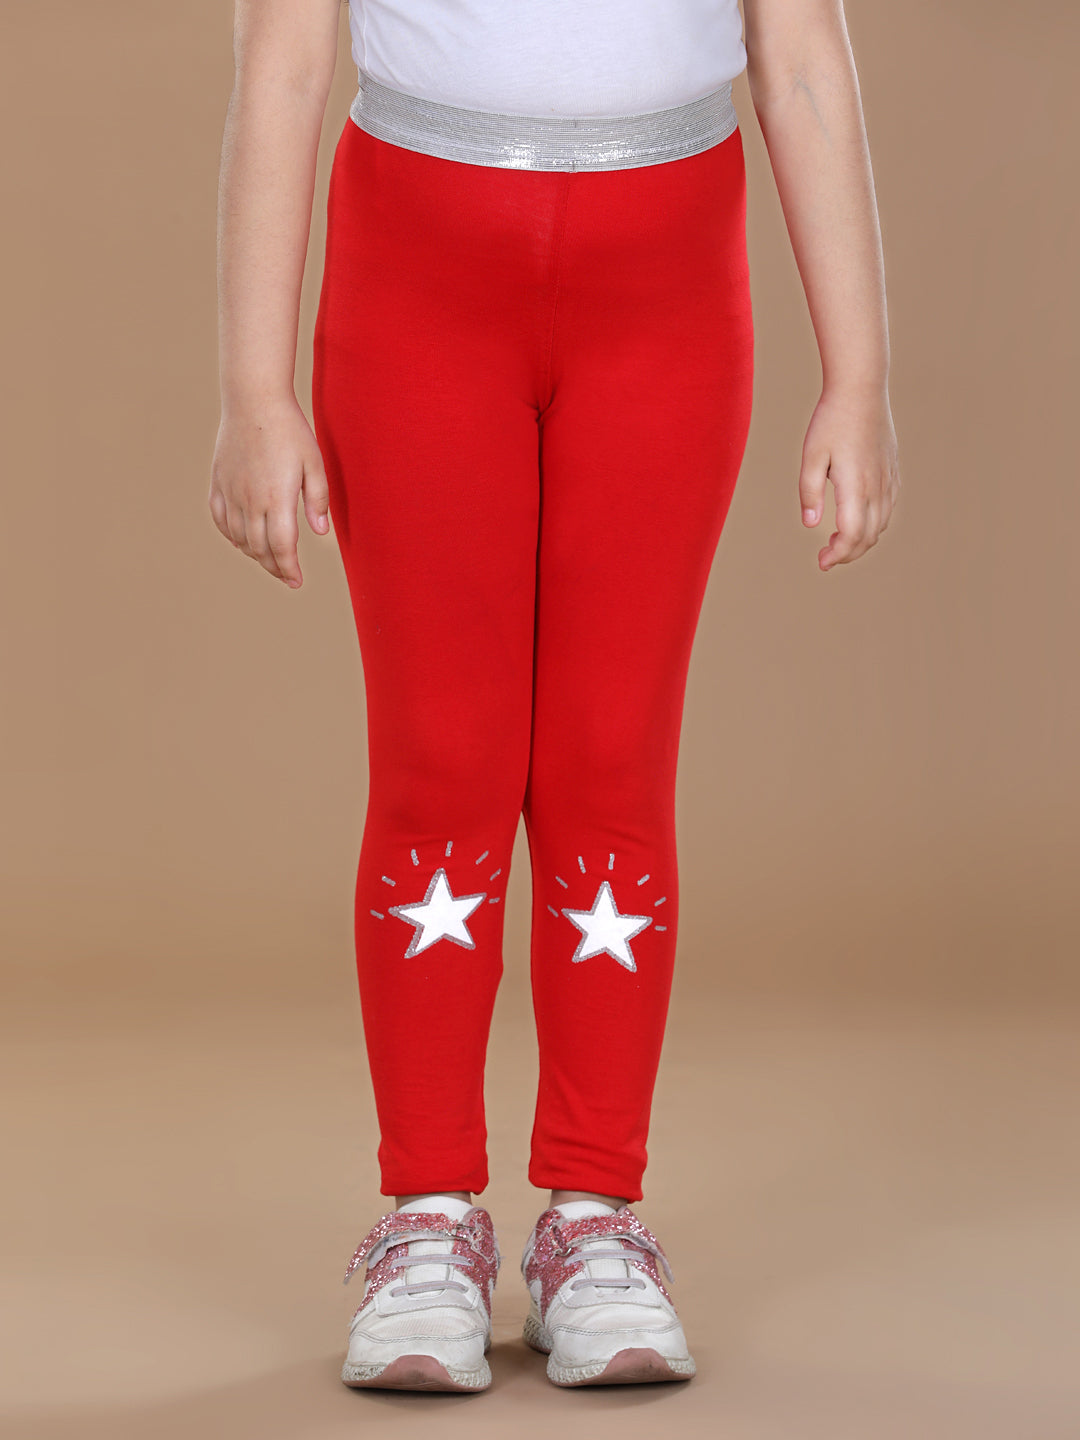 Girls Silver Elasticated Waistband & Star Printed Red Leggings